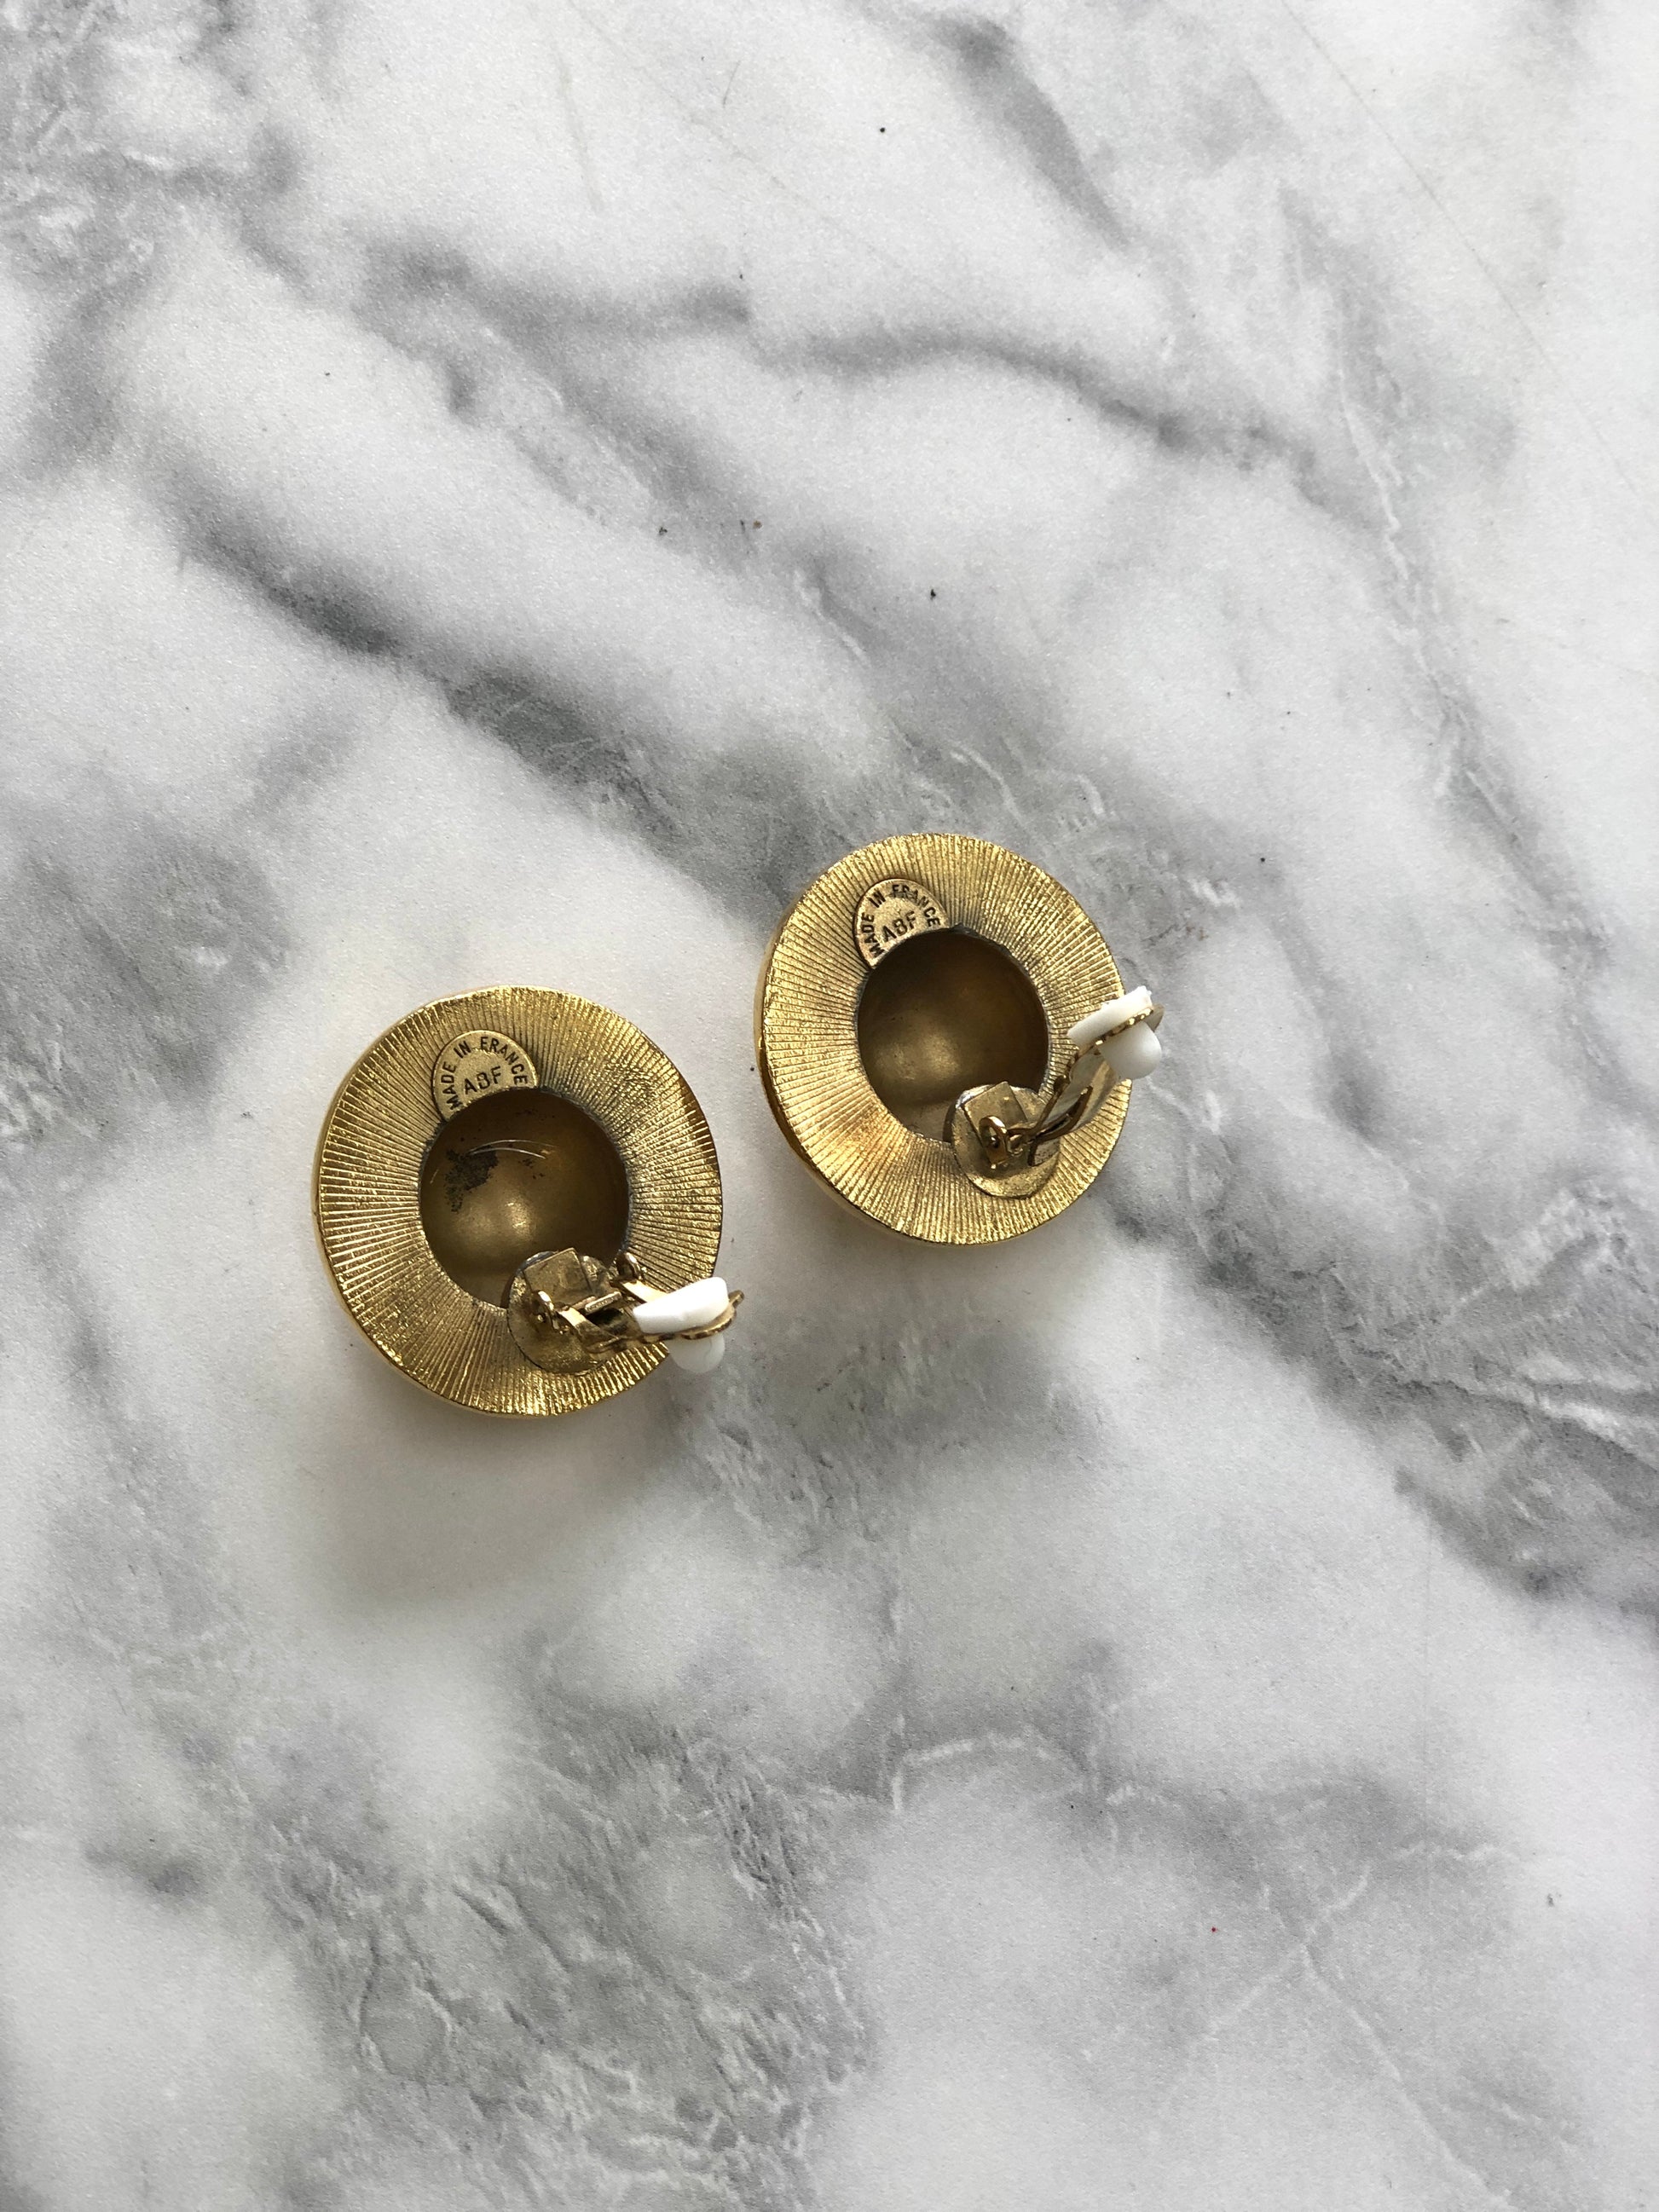 Vintage Louis Vuitton Monogram Earrings Small Gold 3cm